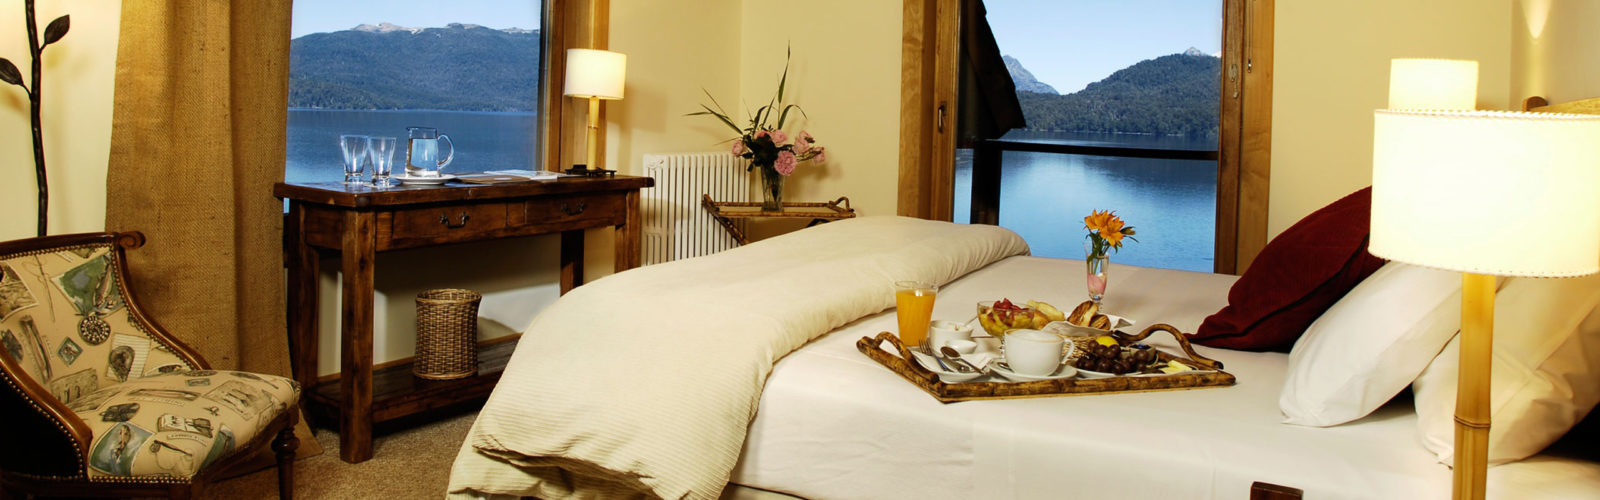 Bedroom interior, Hotel Correntoso, Lake District, Argentina